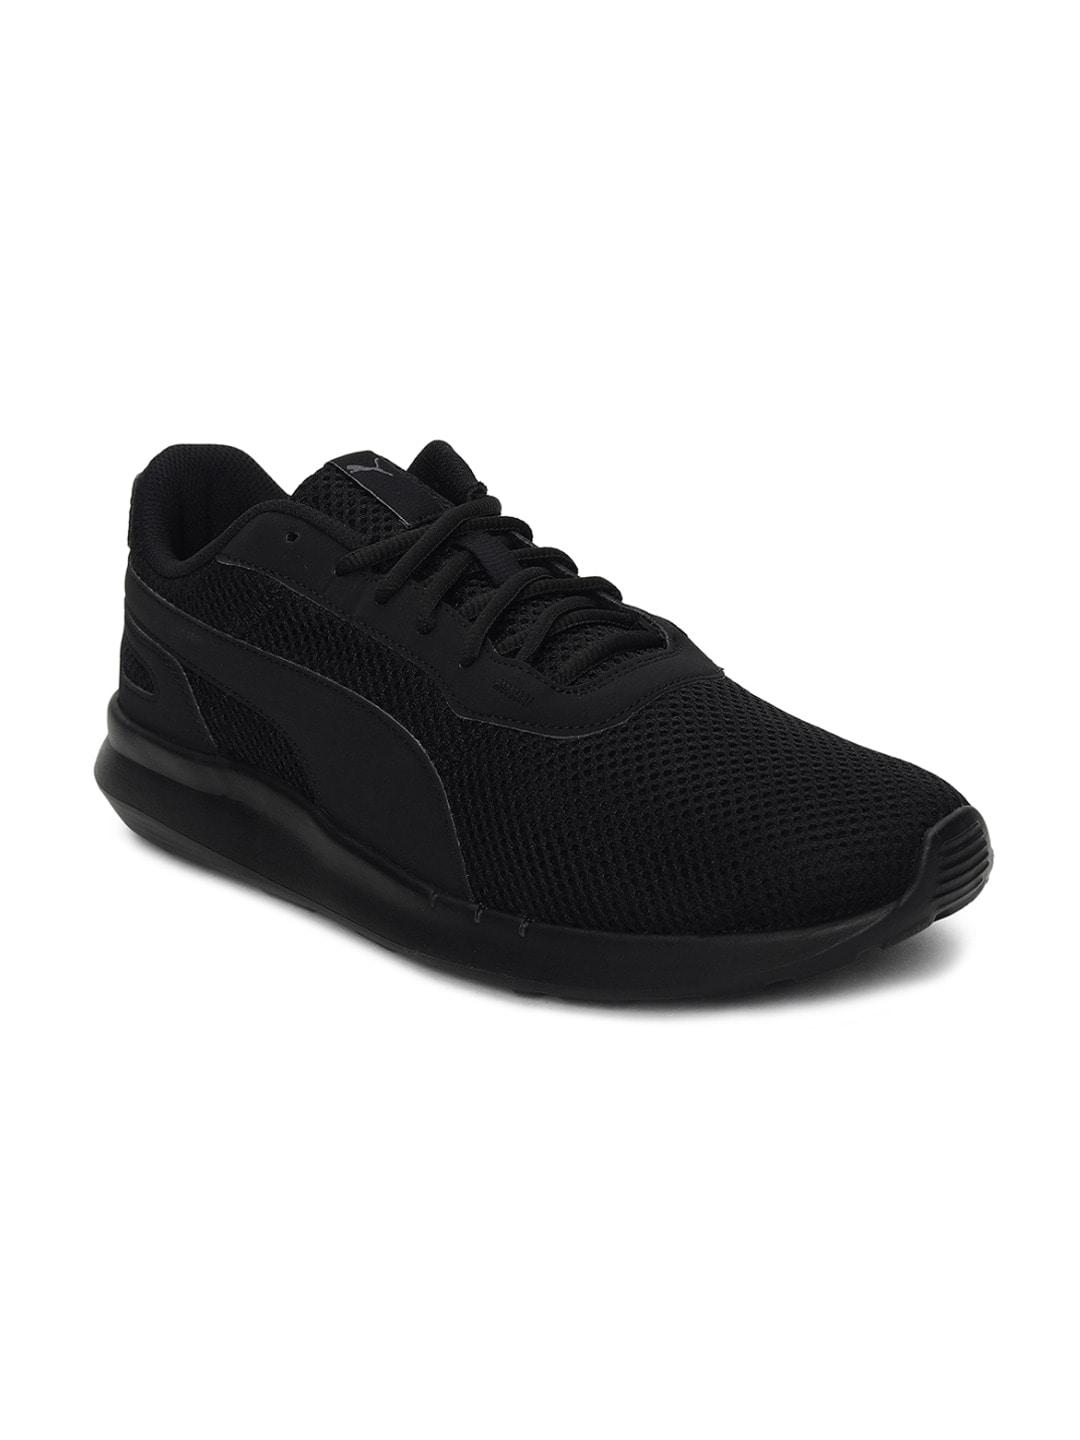 puma-unisex-black-solid-sneakers